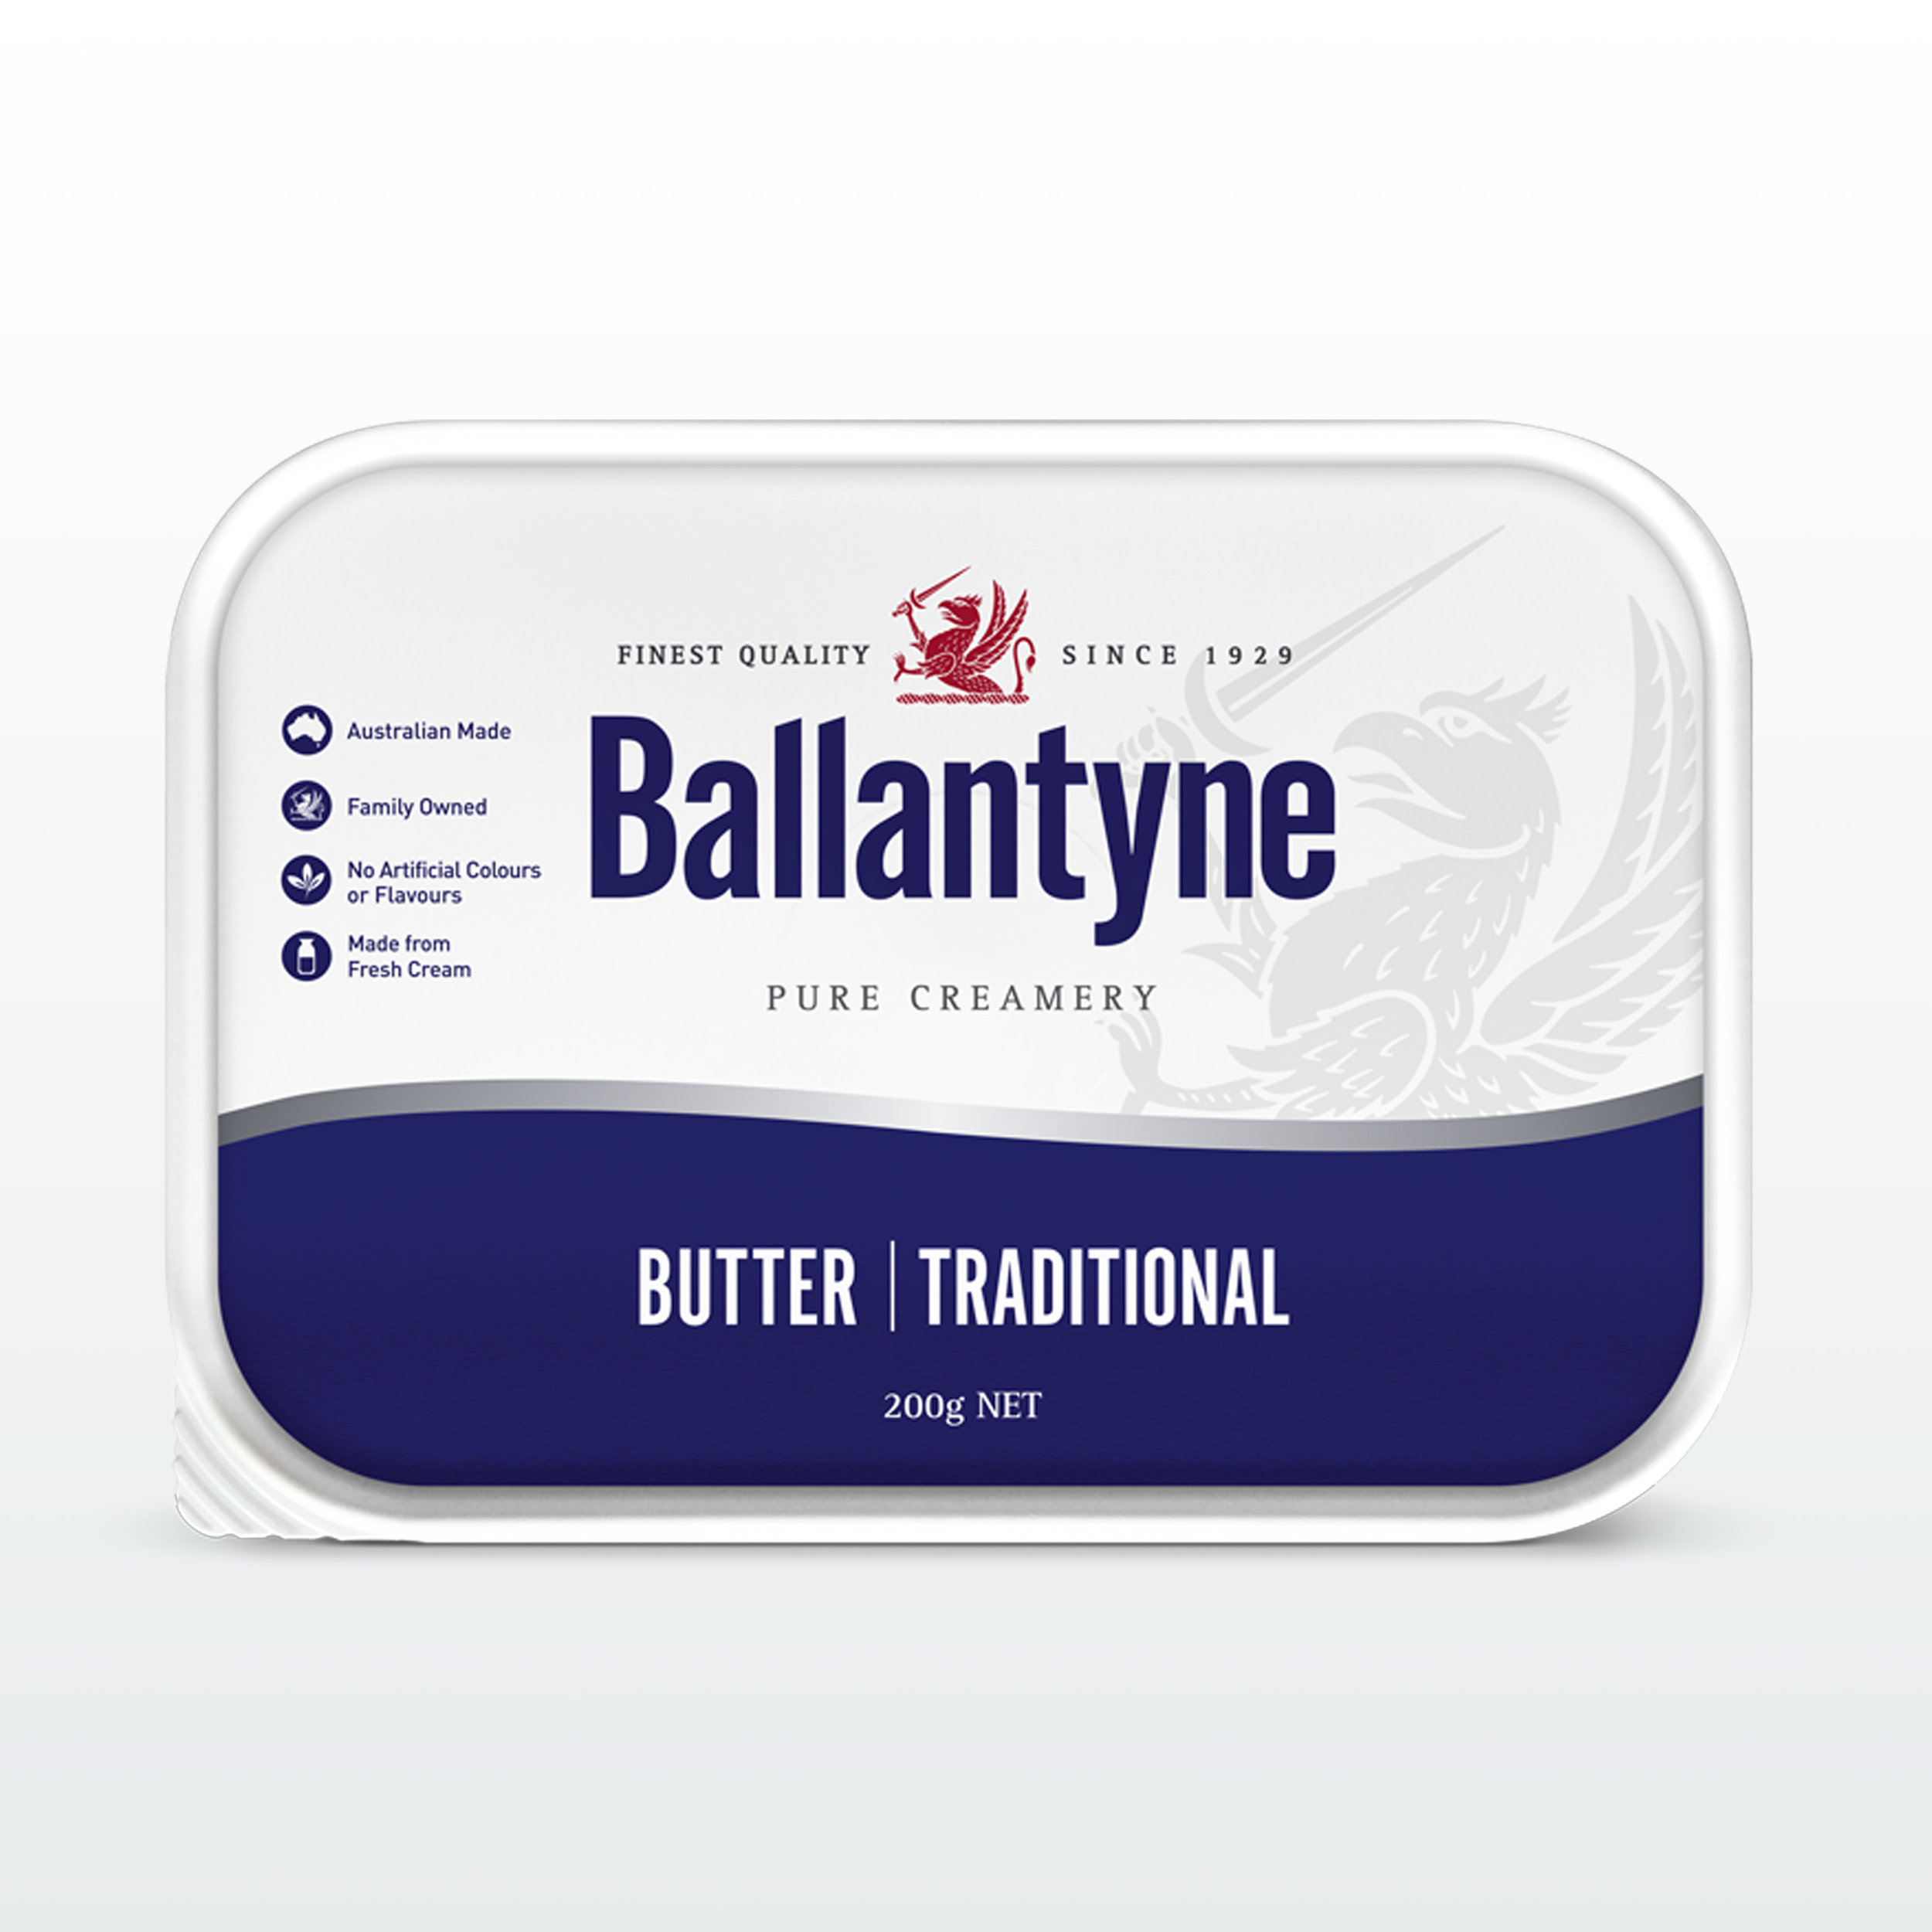 Ballantyne butter